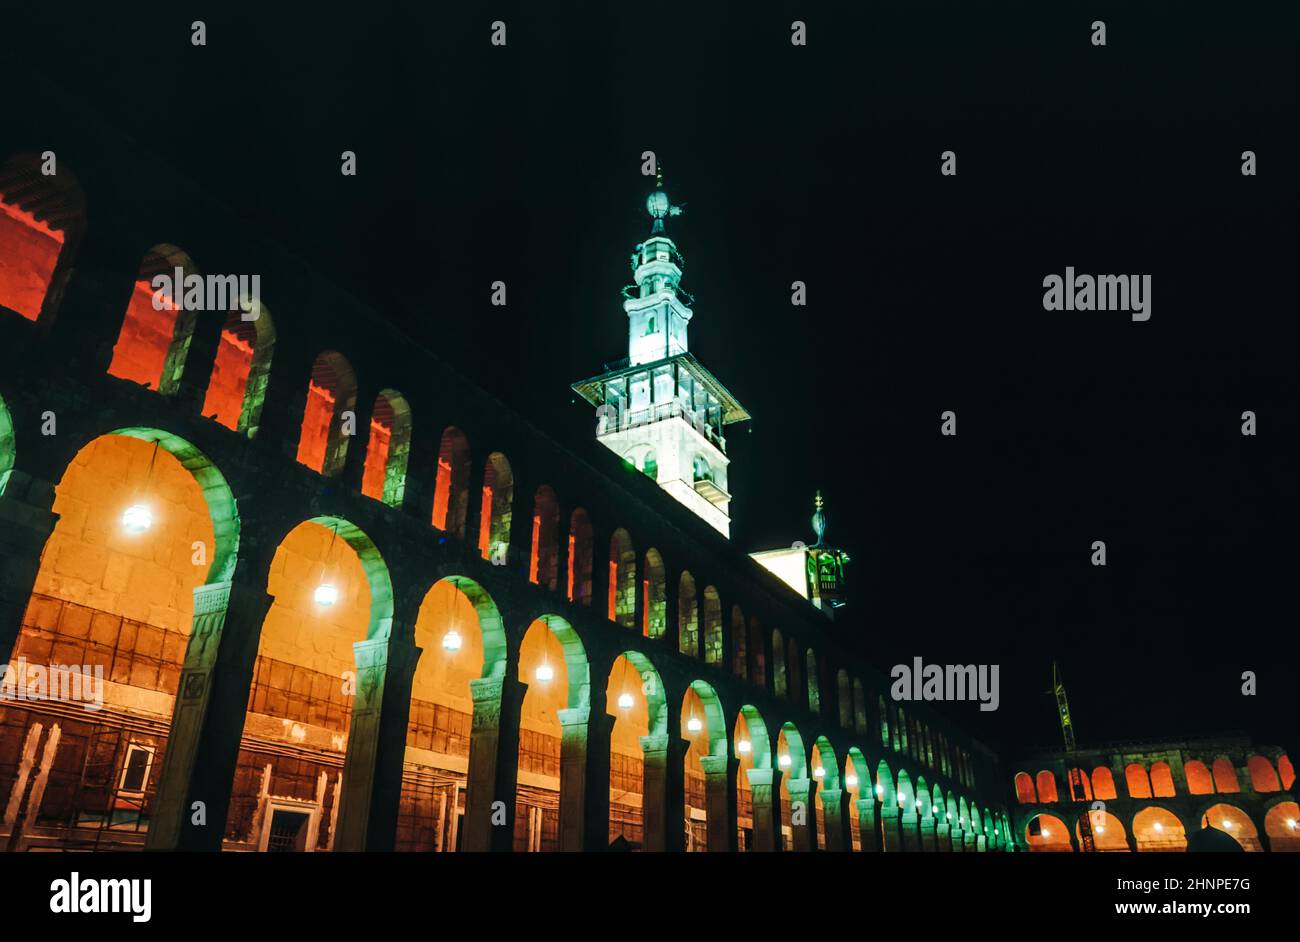 The Omayyad Mosque perfectly illuminated at night Stock Photo